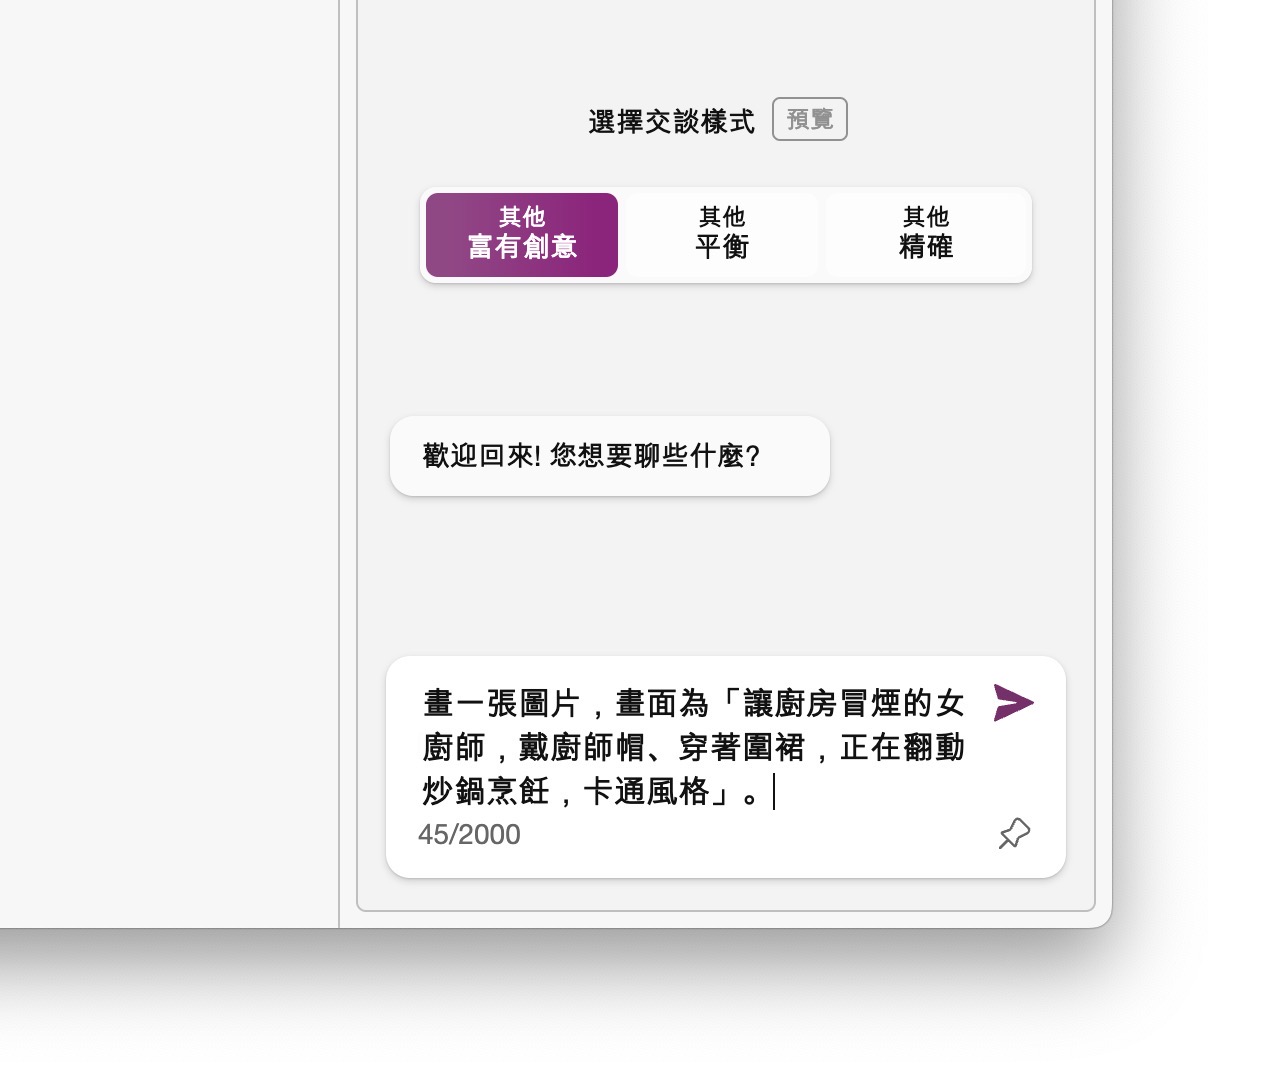 Bing AI 整合影像建立者，現已支援中文指令